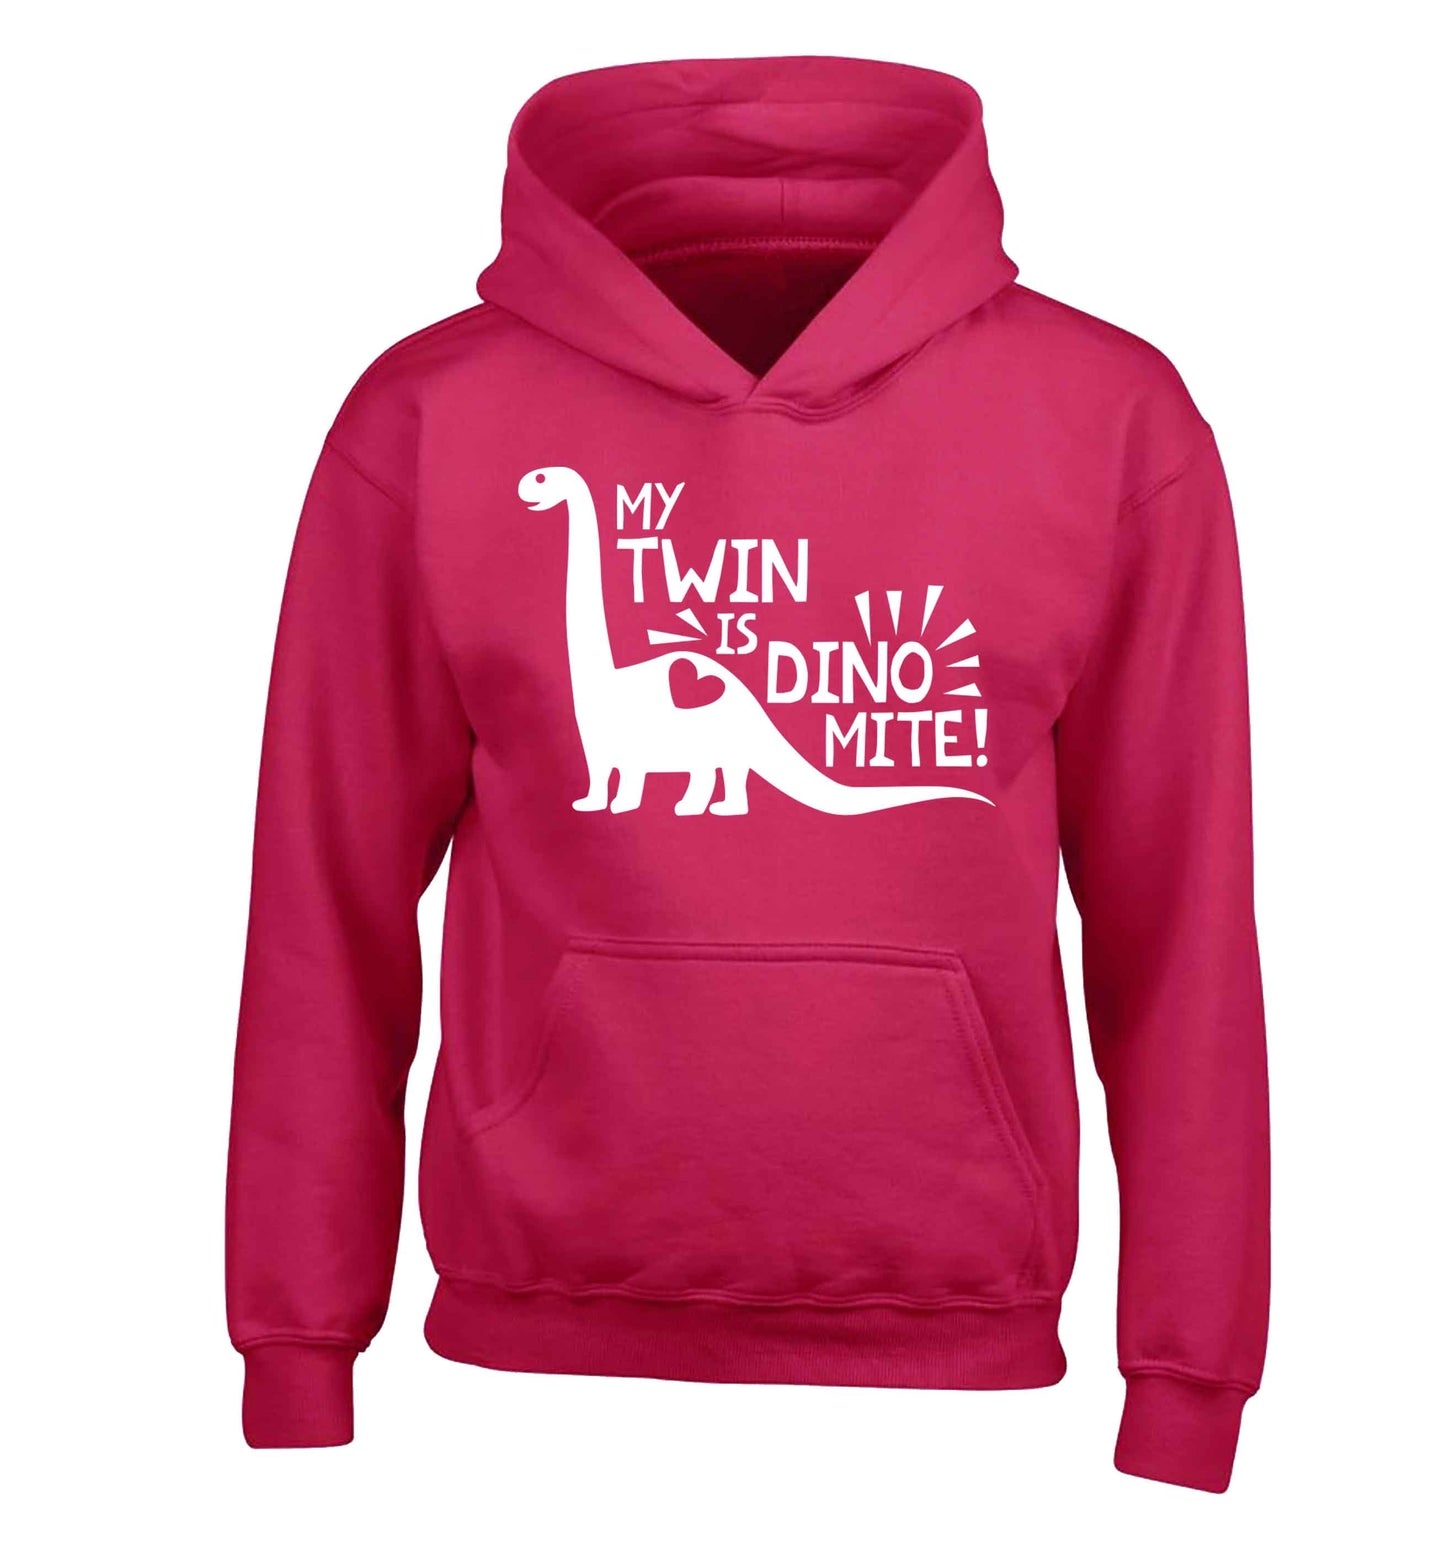 My twin is dinomite! children's pink hoodie 12-13 Years